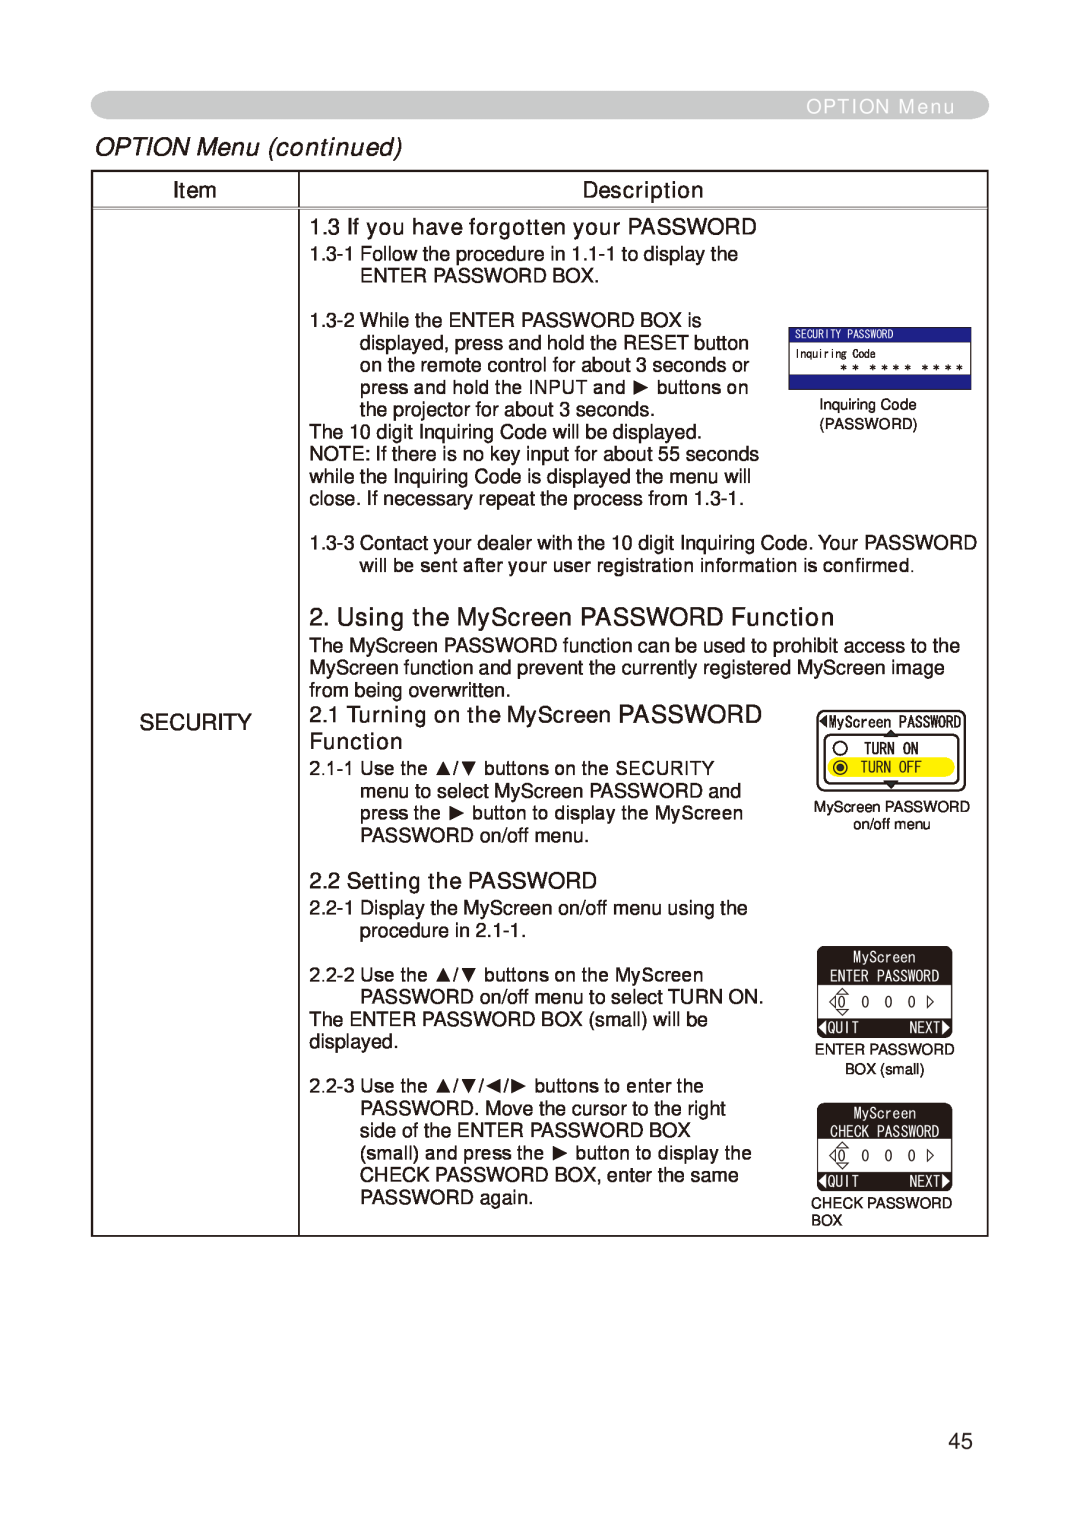 Dukane 8755E-RJ, 8776-RJ user manual Using the MyScreen PASSWORD Function, OPTION Menu continued 